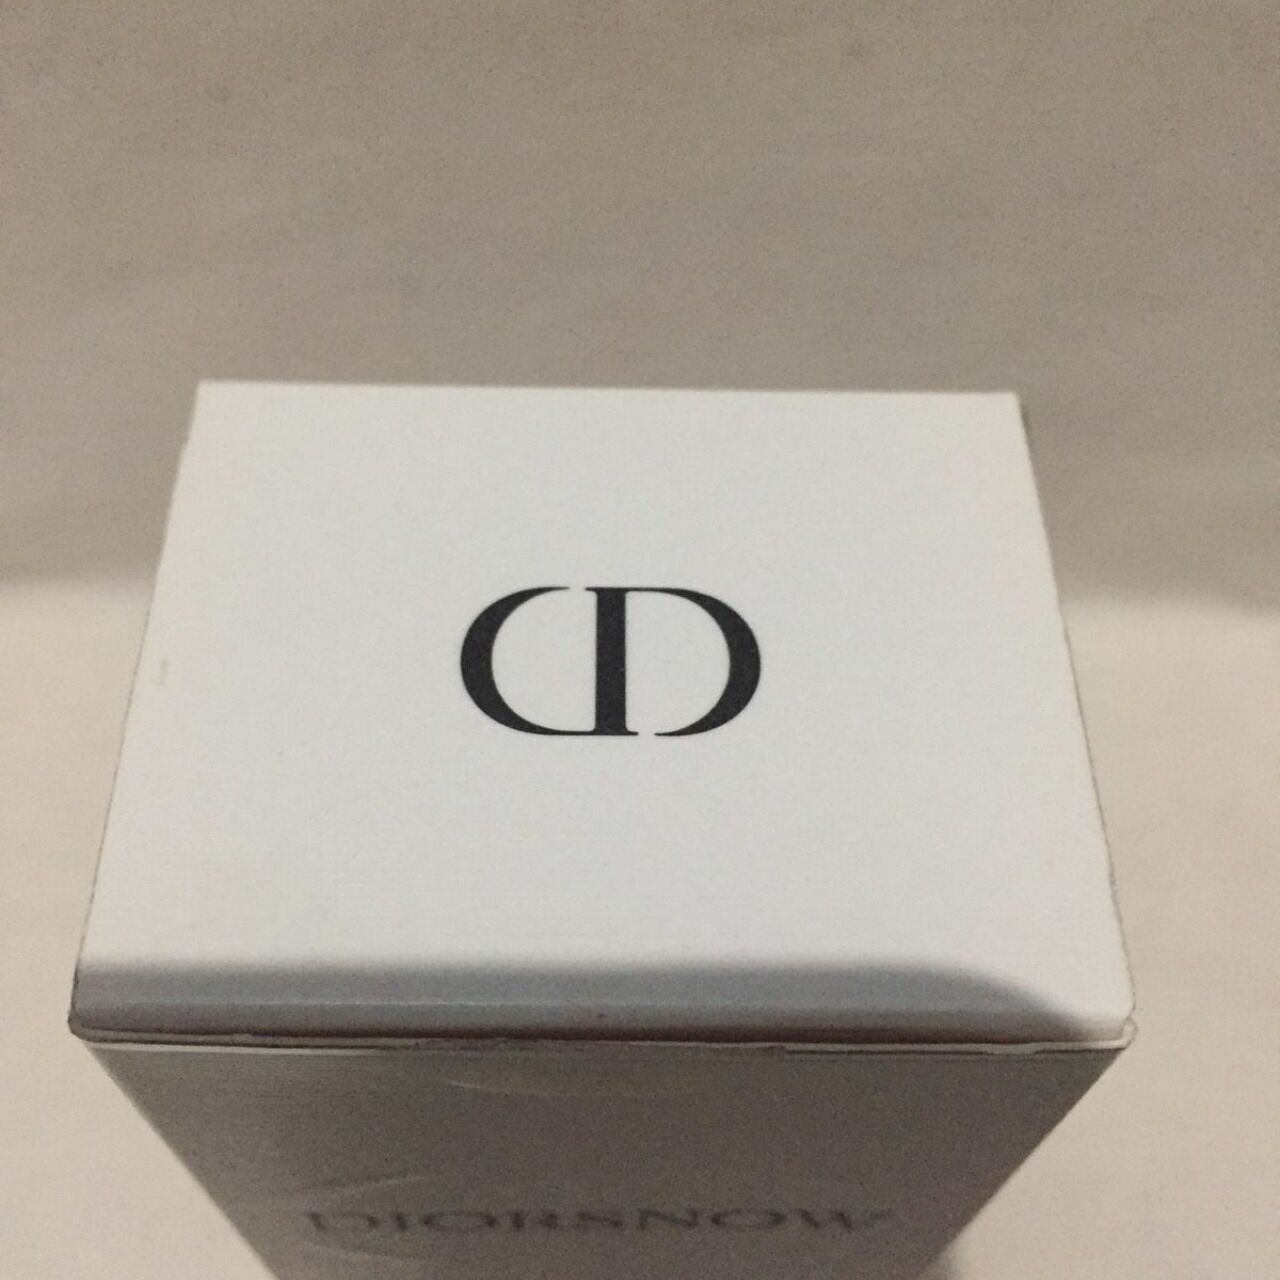 Christian Dior White Skin Care